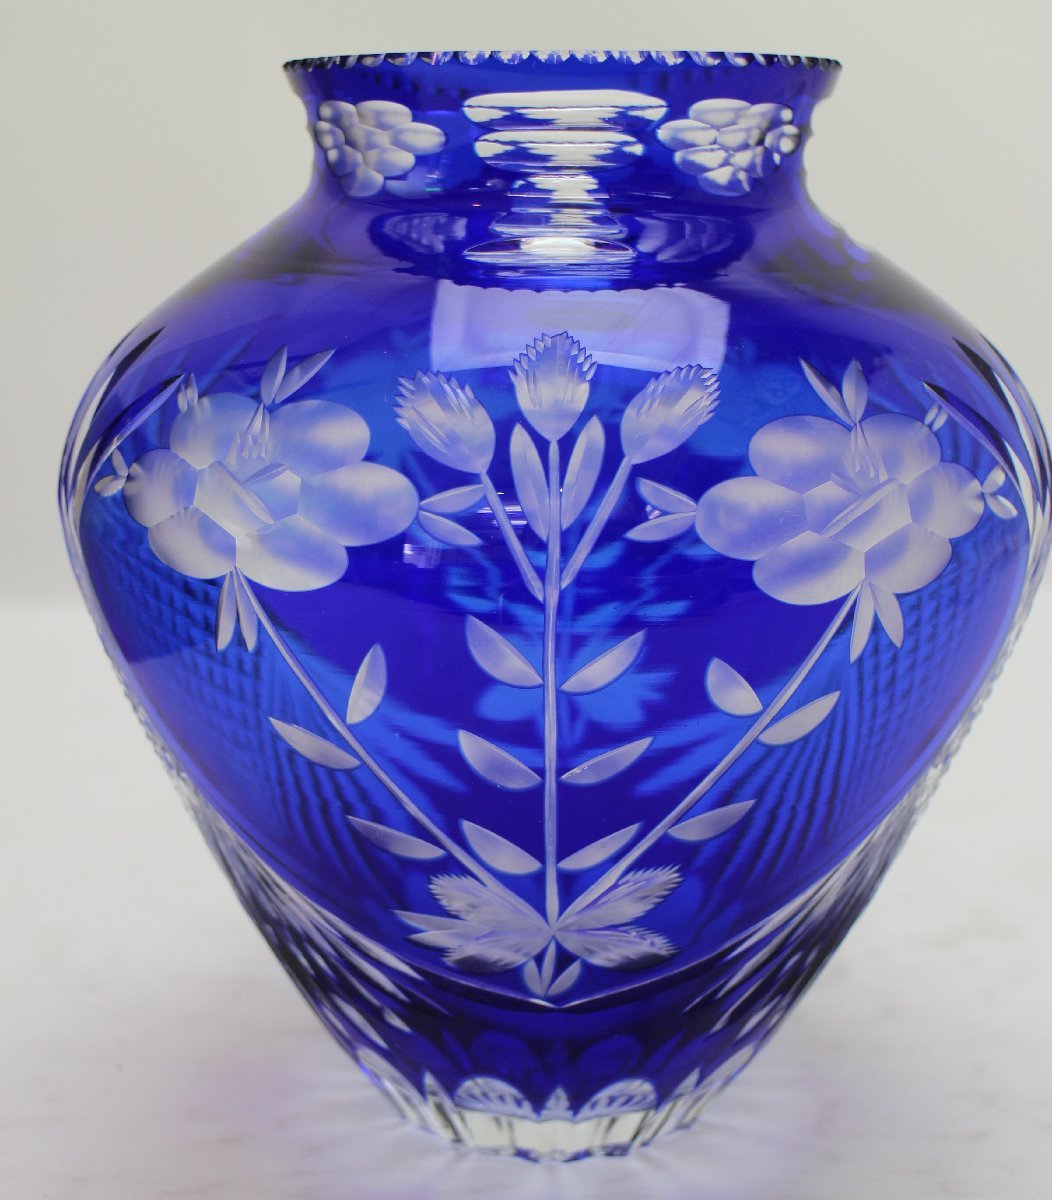  unused storage goods cristaluna s.a. cut glass vase Argentina hand made hand cut flower vase ornament 